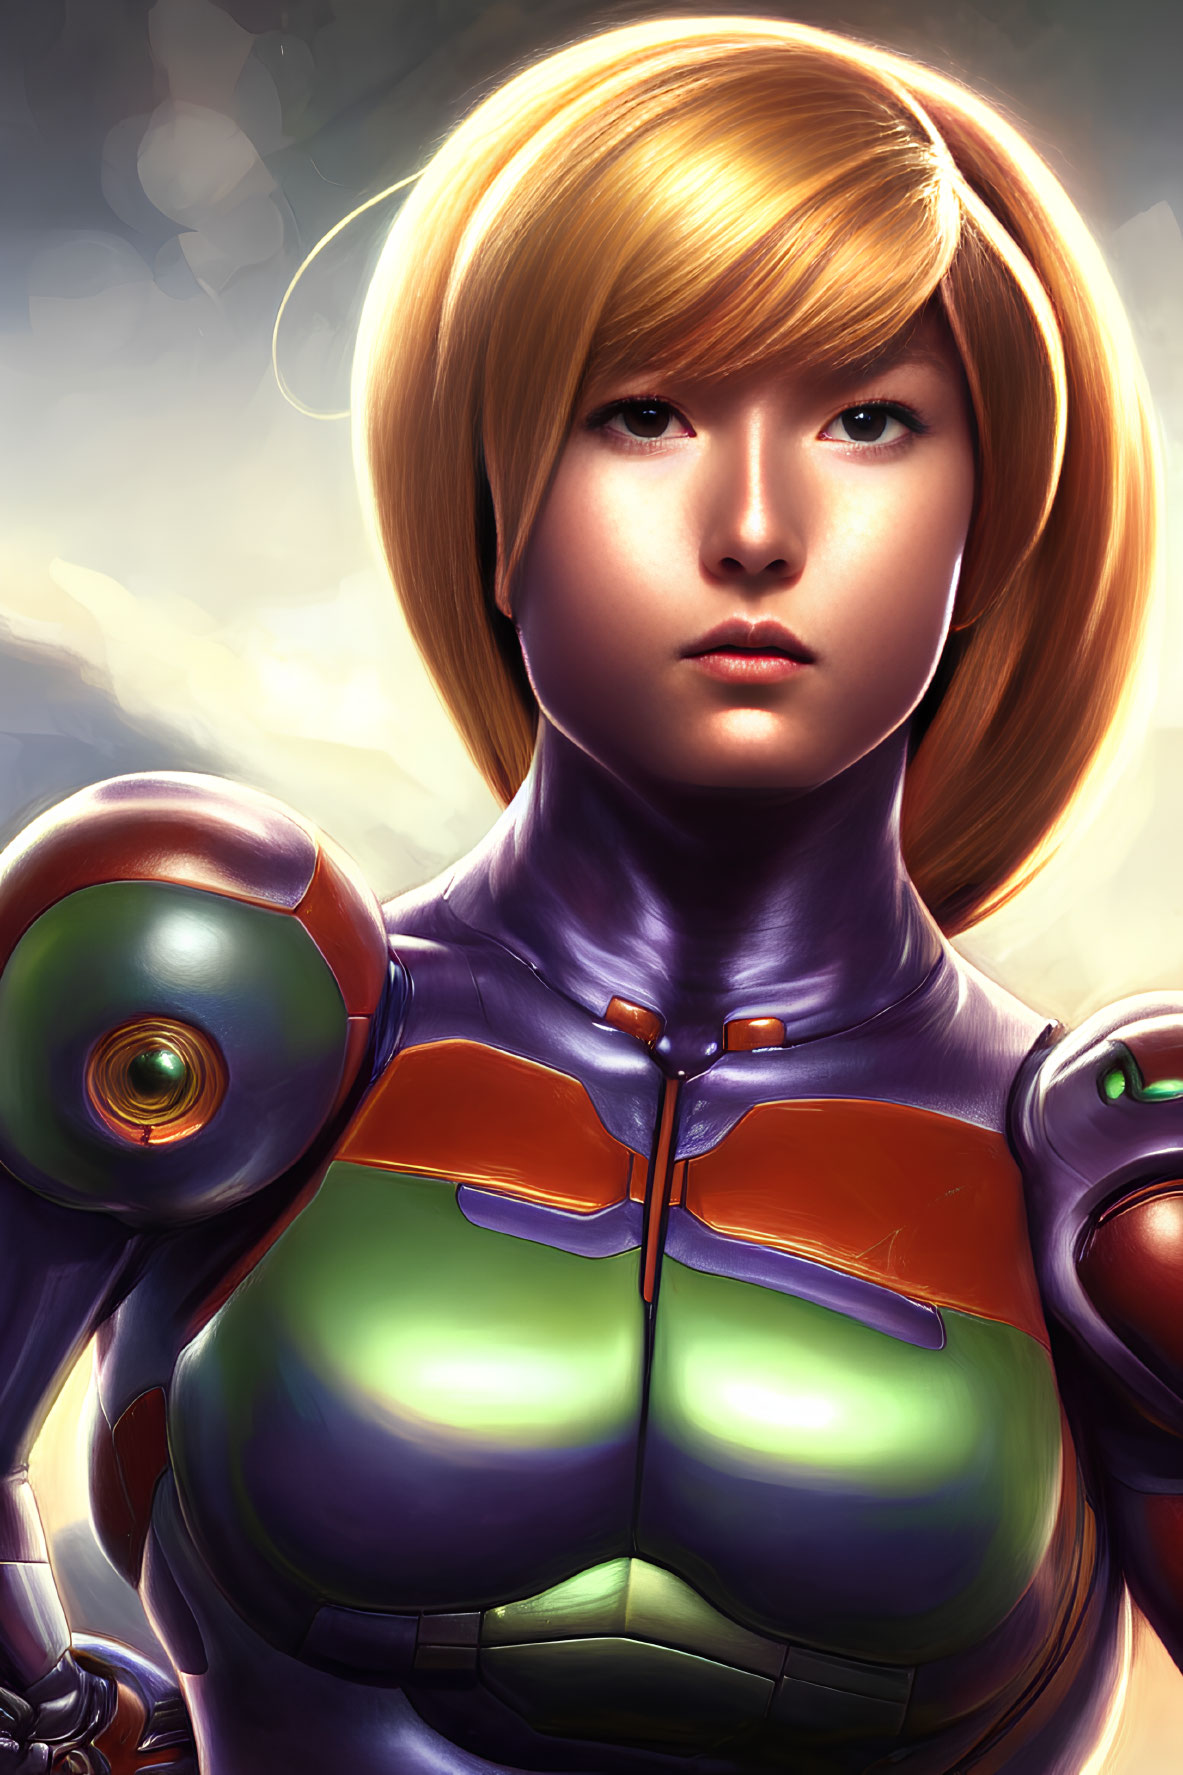 Digital illustration: Woman in futuristic armor with short blonde hair